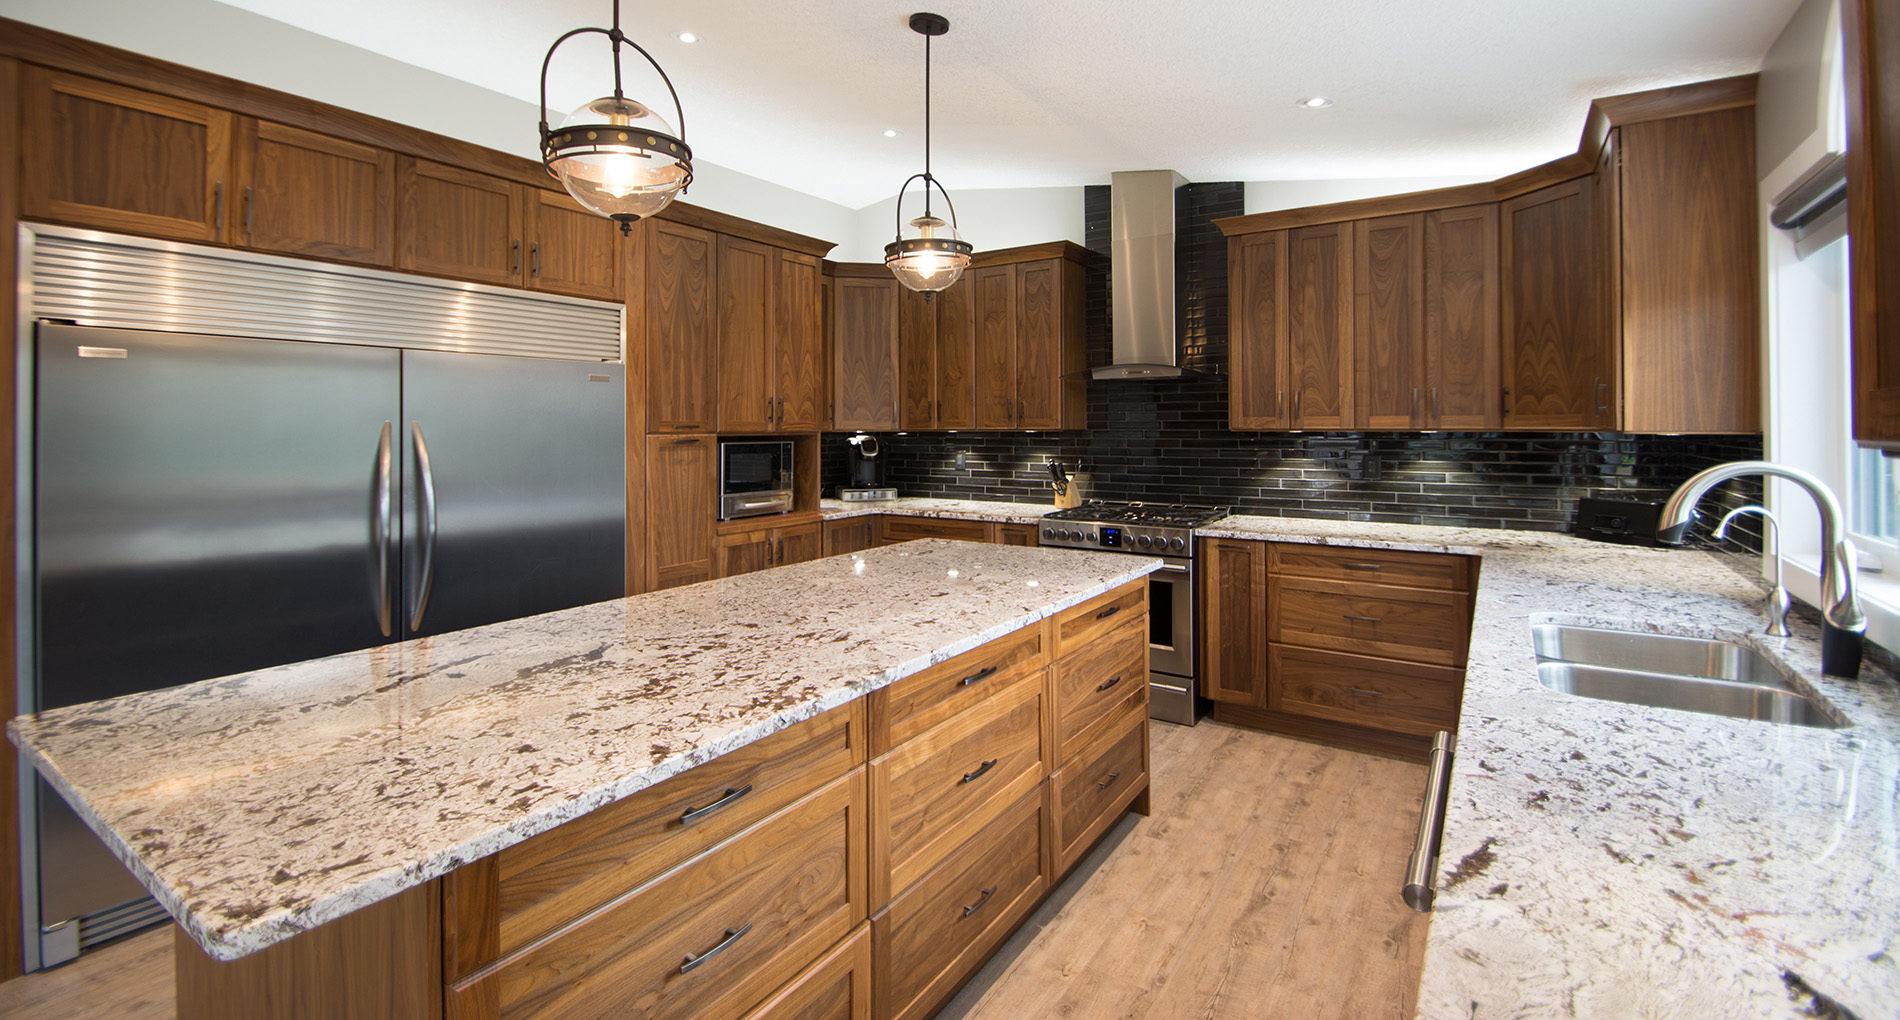 Kitchen Renovations Design In Red Deer Alair Homes Red Deer